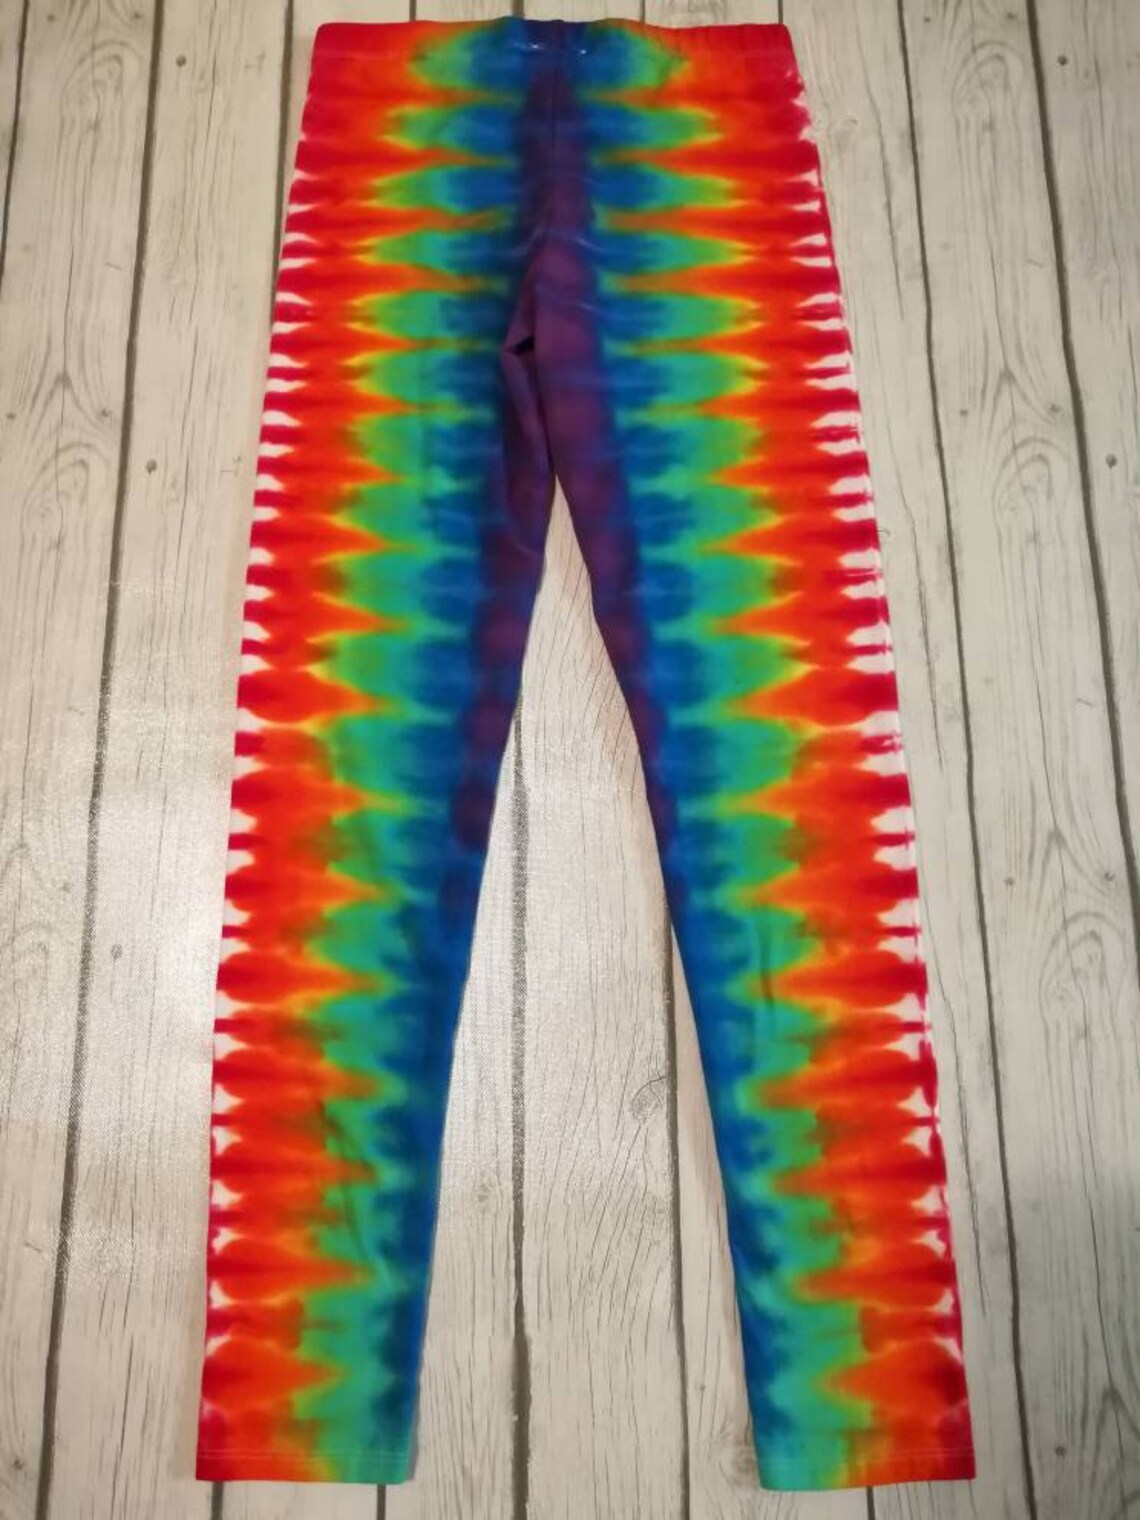 Rainbow Tie Dye Leggings Tie Dye Leggings Tie Dye Tie Dye | Etsy